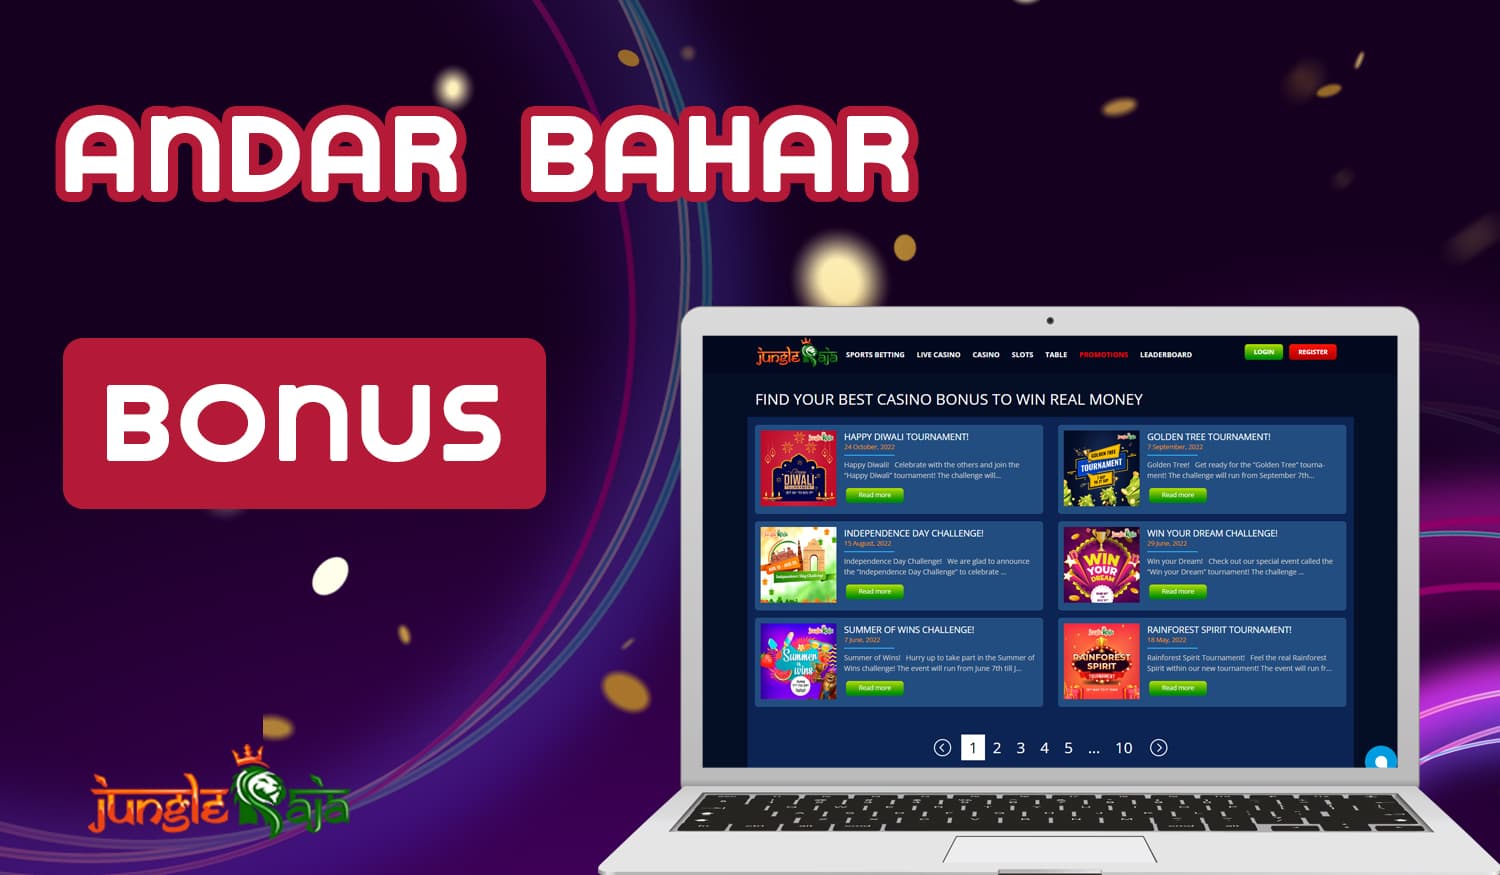 How to get and use JungleRaja bonuses playing andar bahar